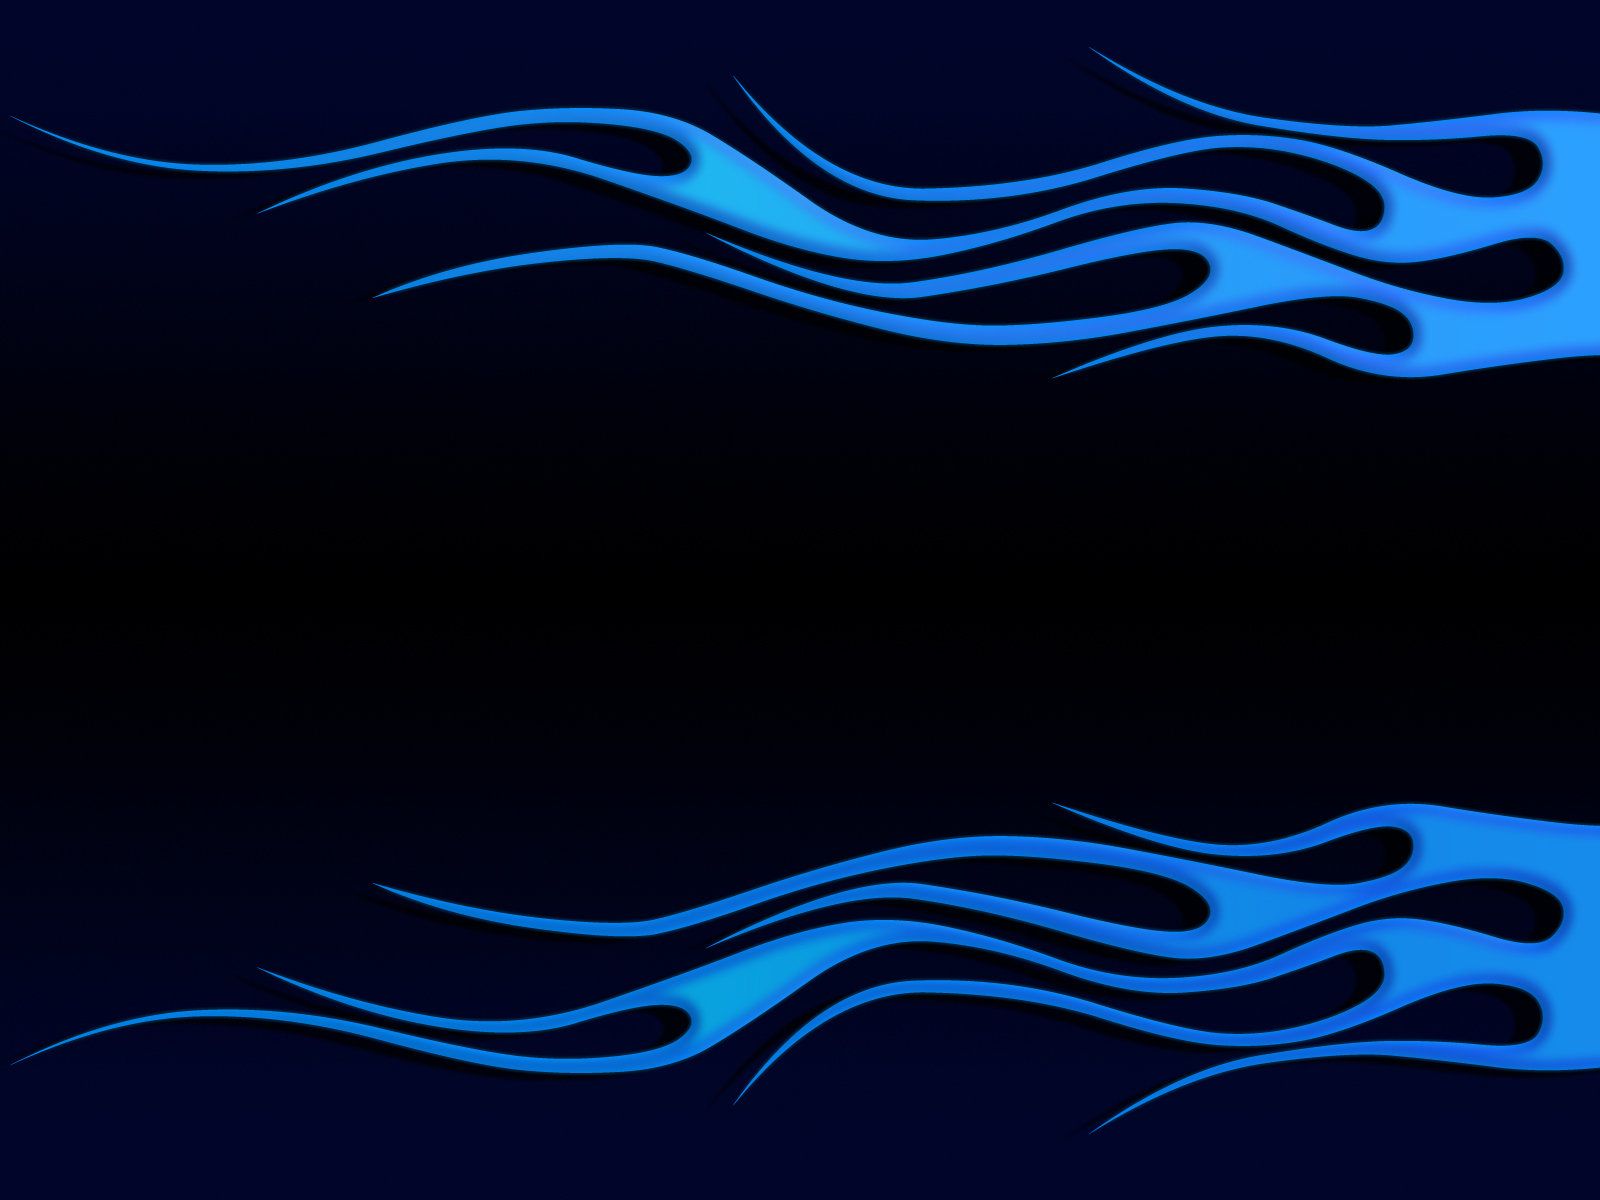 Free download Hot Rod Flames Wallpaper Flames dark blue by jbensch [1600x1200] for your Desktop, Mobile & Tablet. Explore Live Flames Wallpaper. Blue Flame Wallpaper, Flames Wallpaper Background for